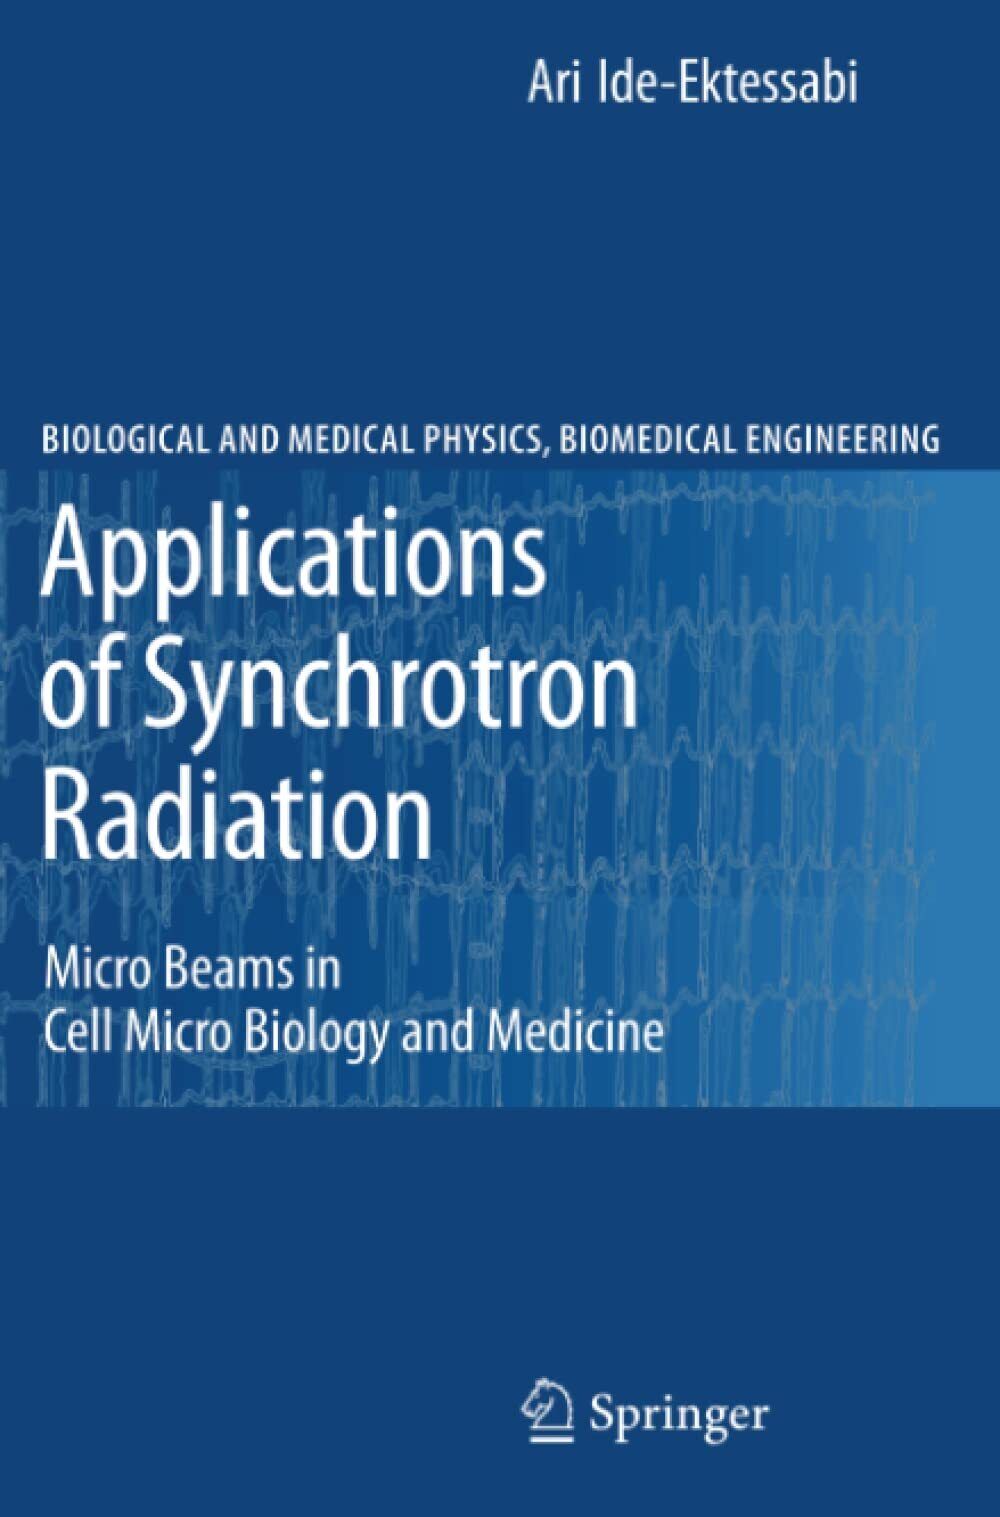 Applications of Synchrotron Radiation - Ari Ide-Ektessabi - Springer, 2010